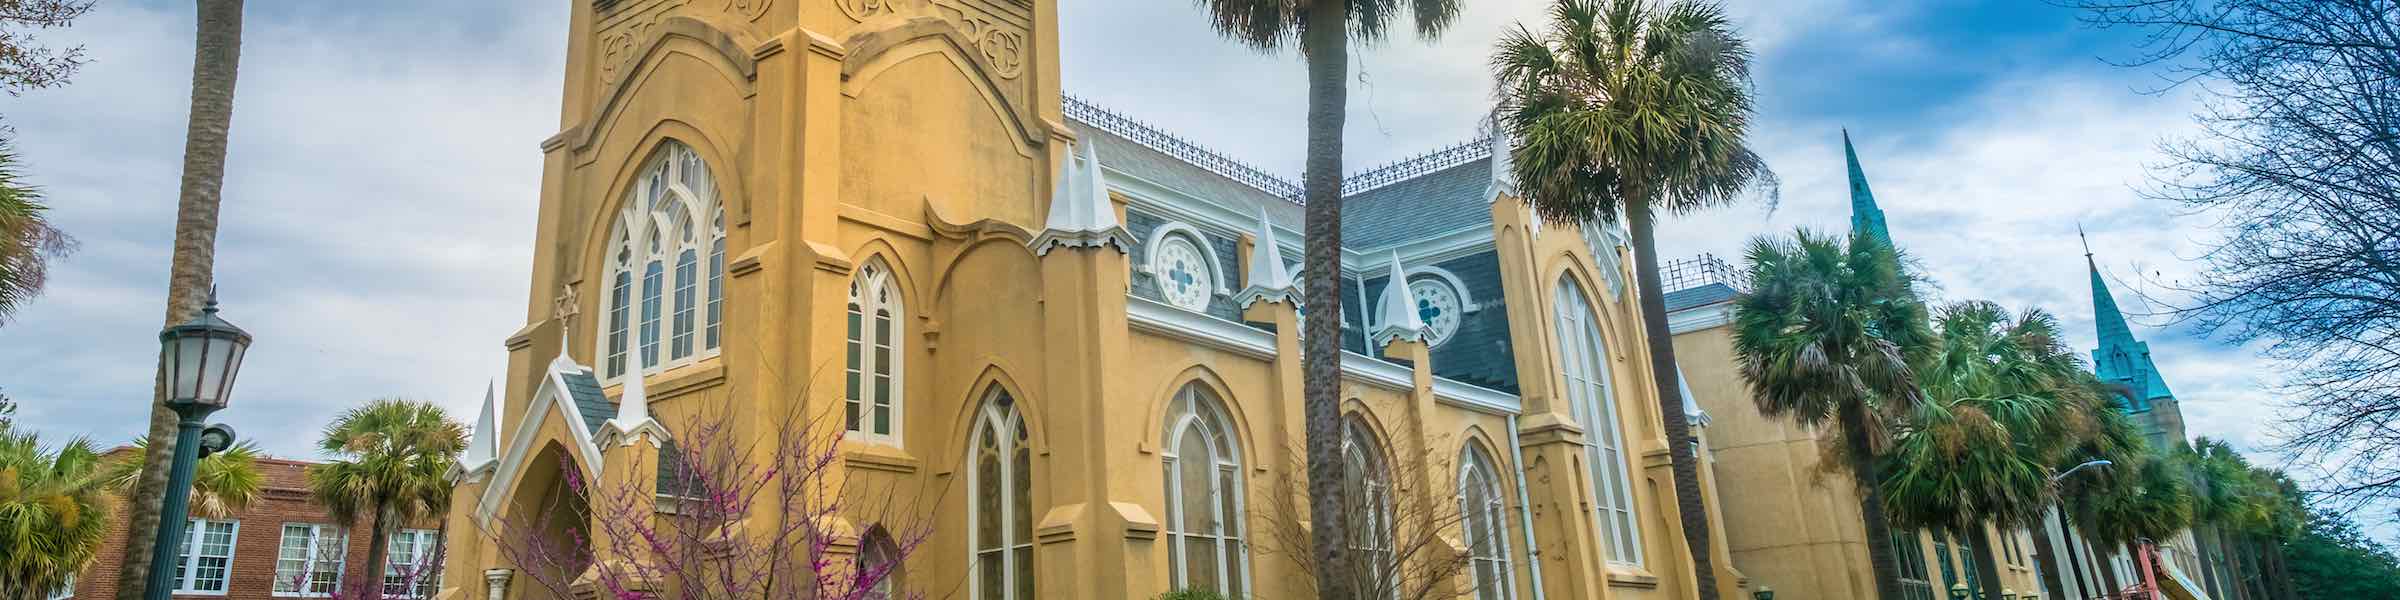 Congregation Mickve Israel synagogue, on Monterey Square, Savannah, GA.